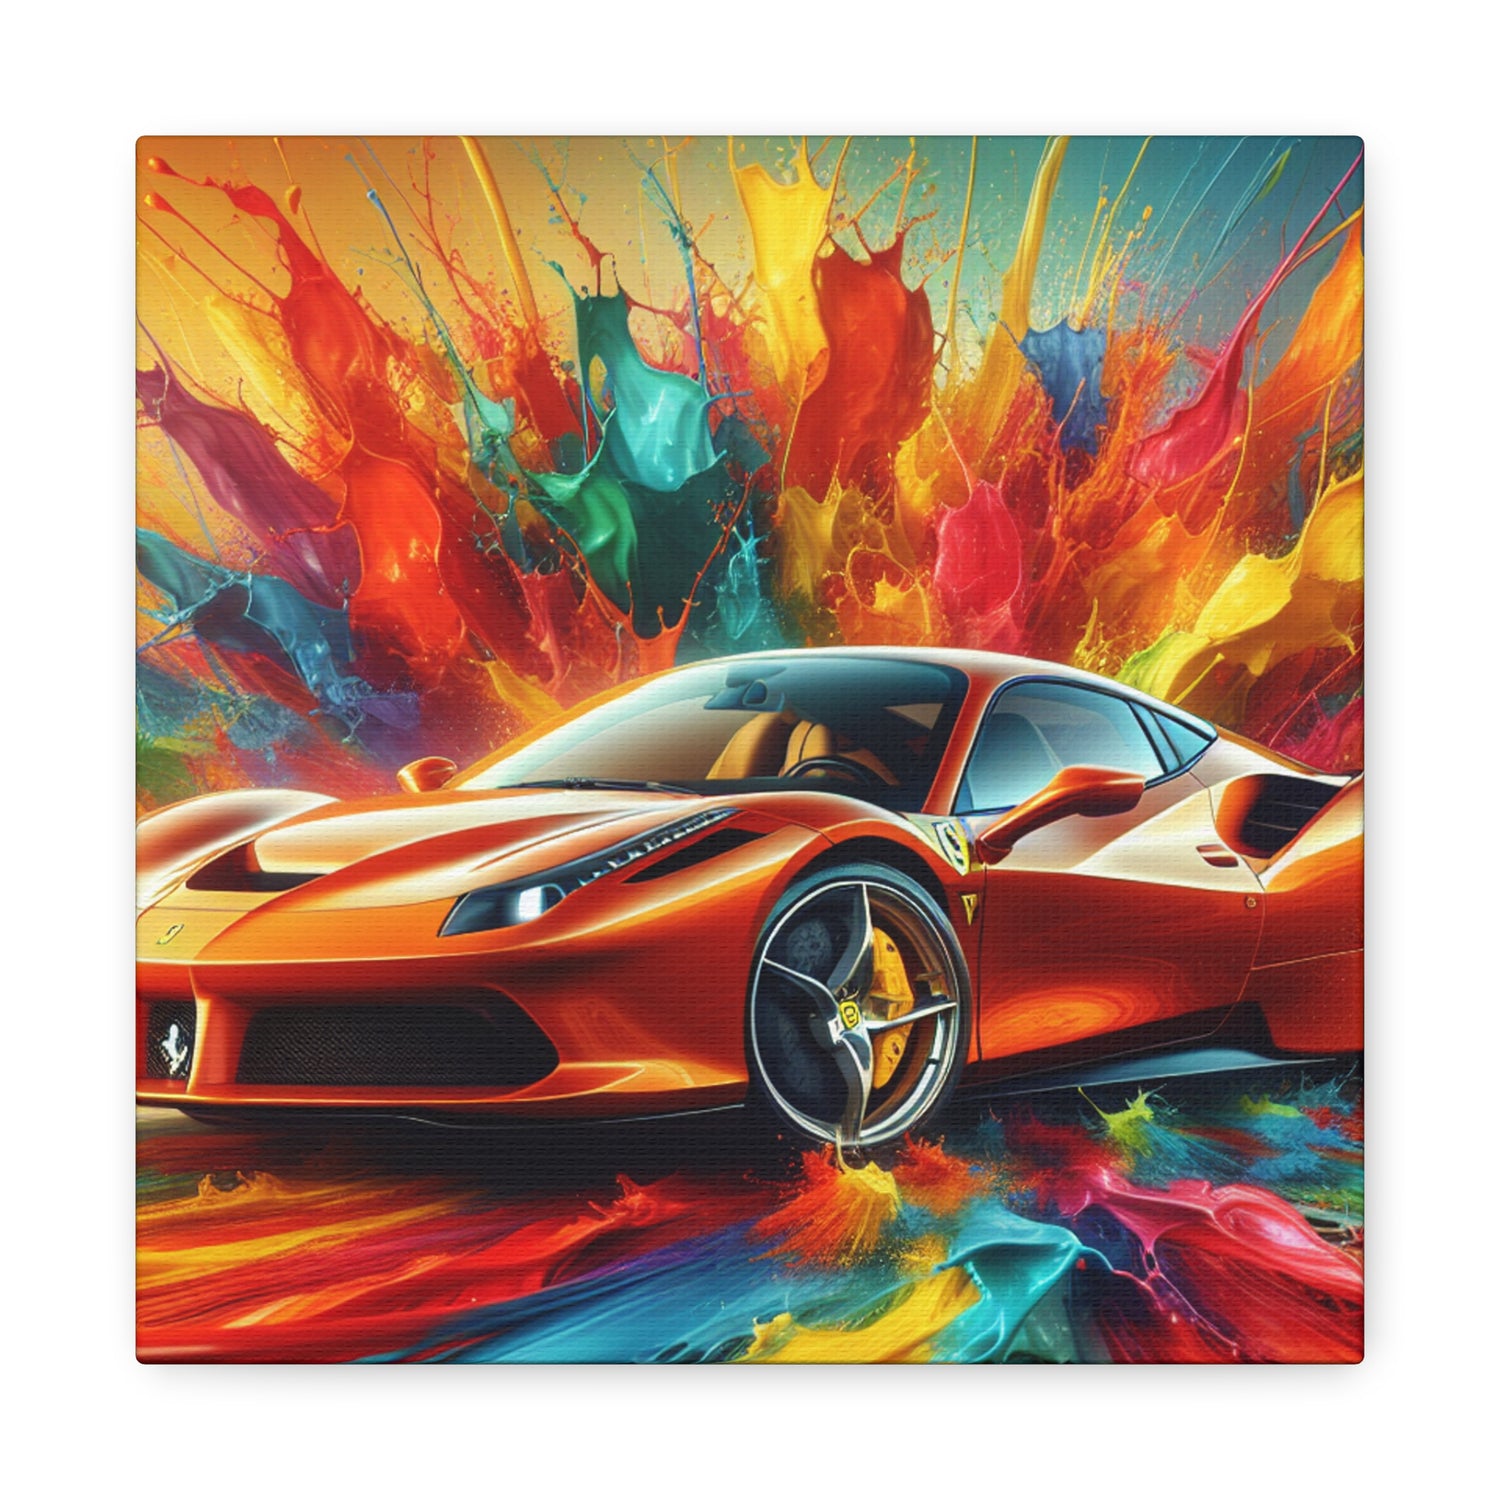 Ferrari Luxury Car Canva Art - Perfect for Man Cave Decor, Vintage Car Wall Art, Sports Car Enthusiast, Garage Decor, Luxury Auto Wall Print